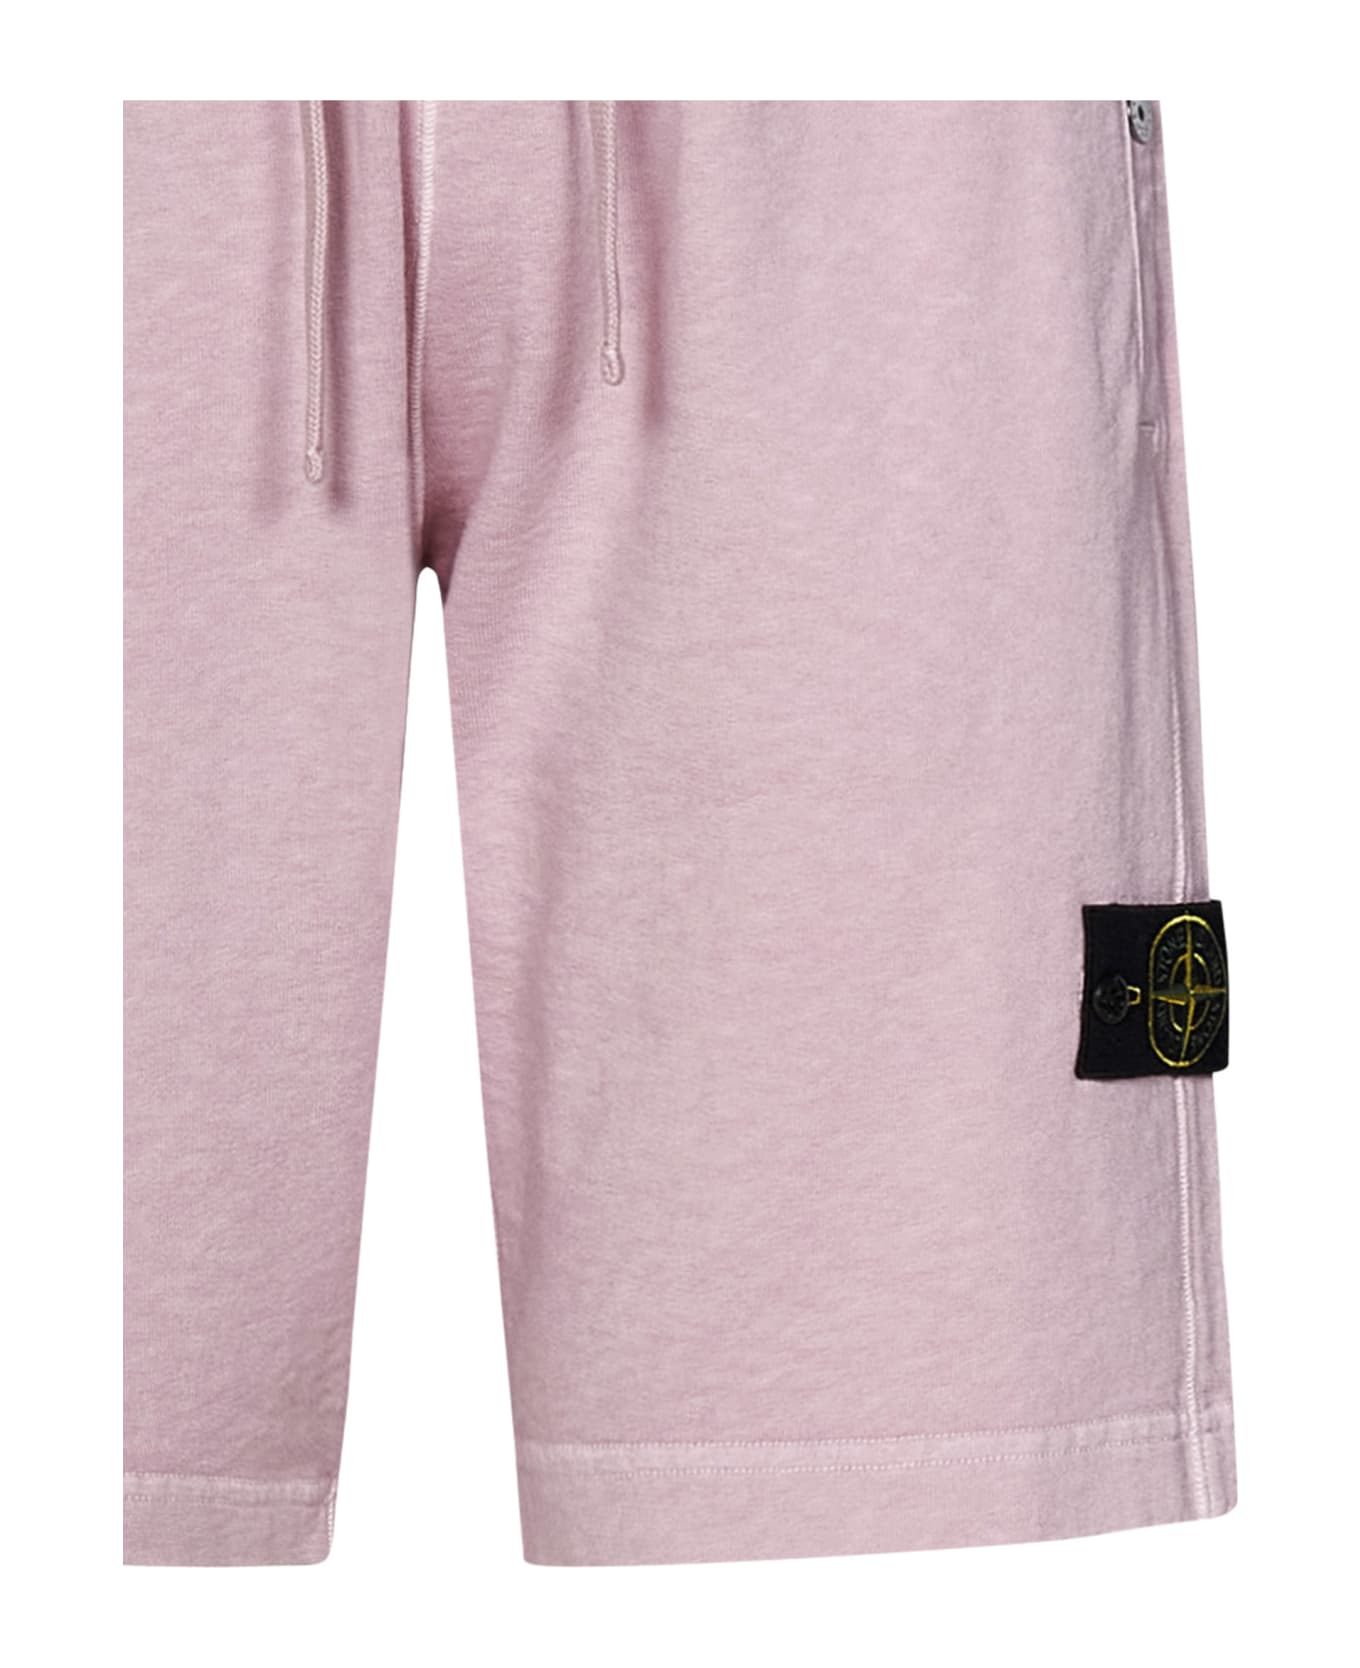 Stone Island Shorts - Pink